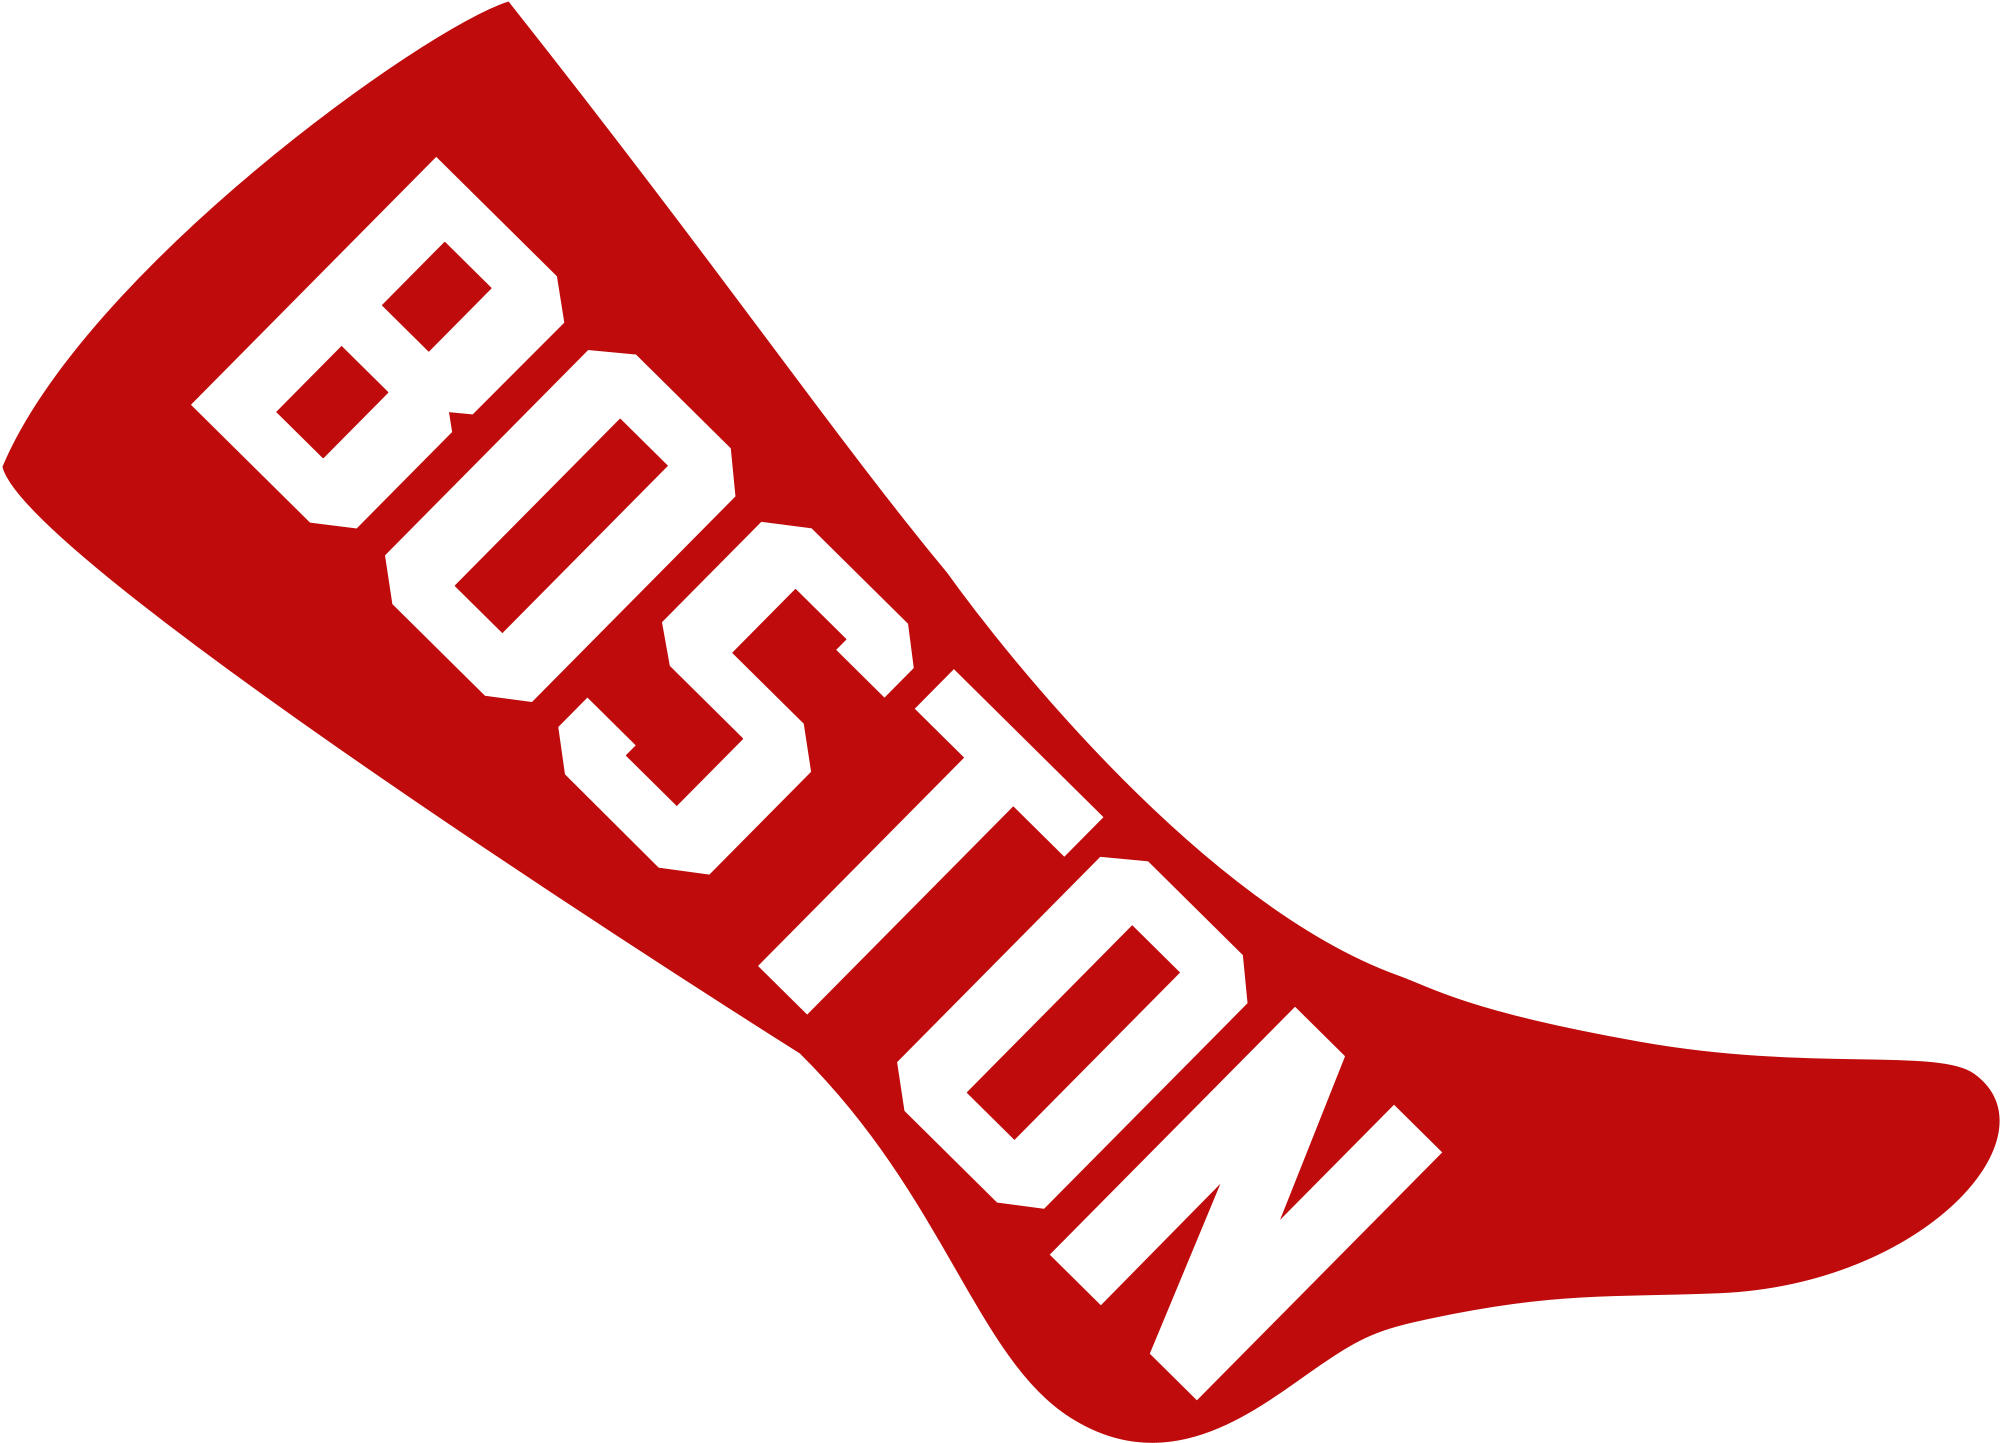 Boston Red Sox - Wikipedia, the free encyclopedia